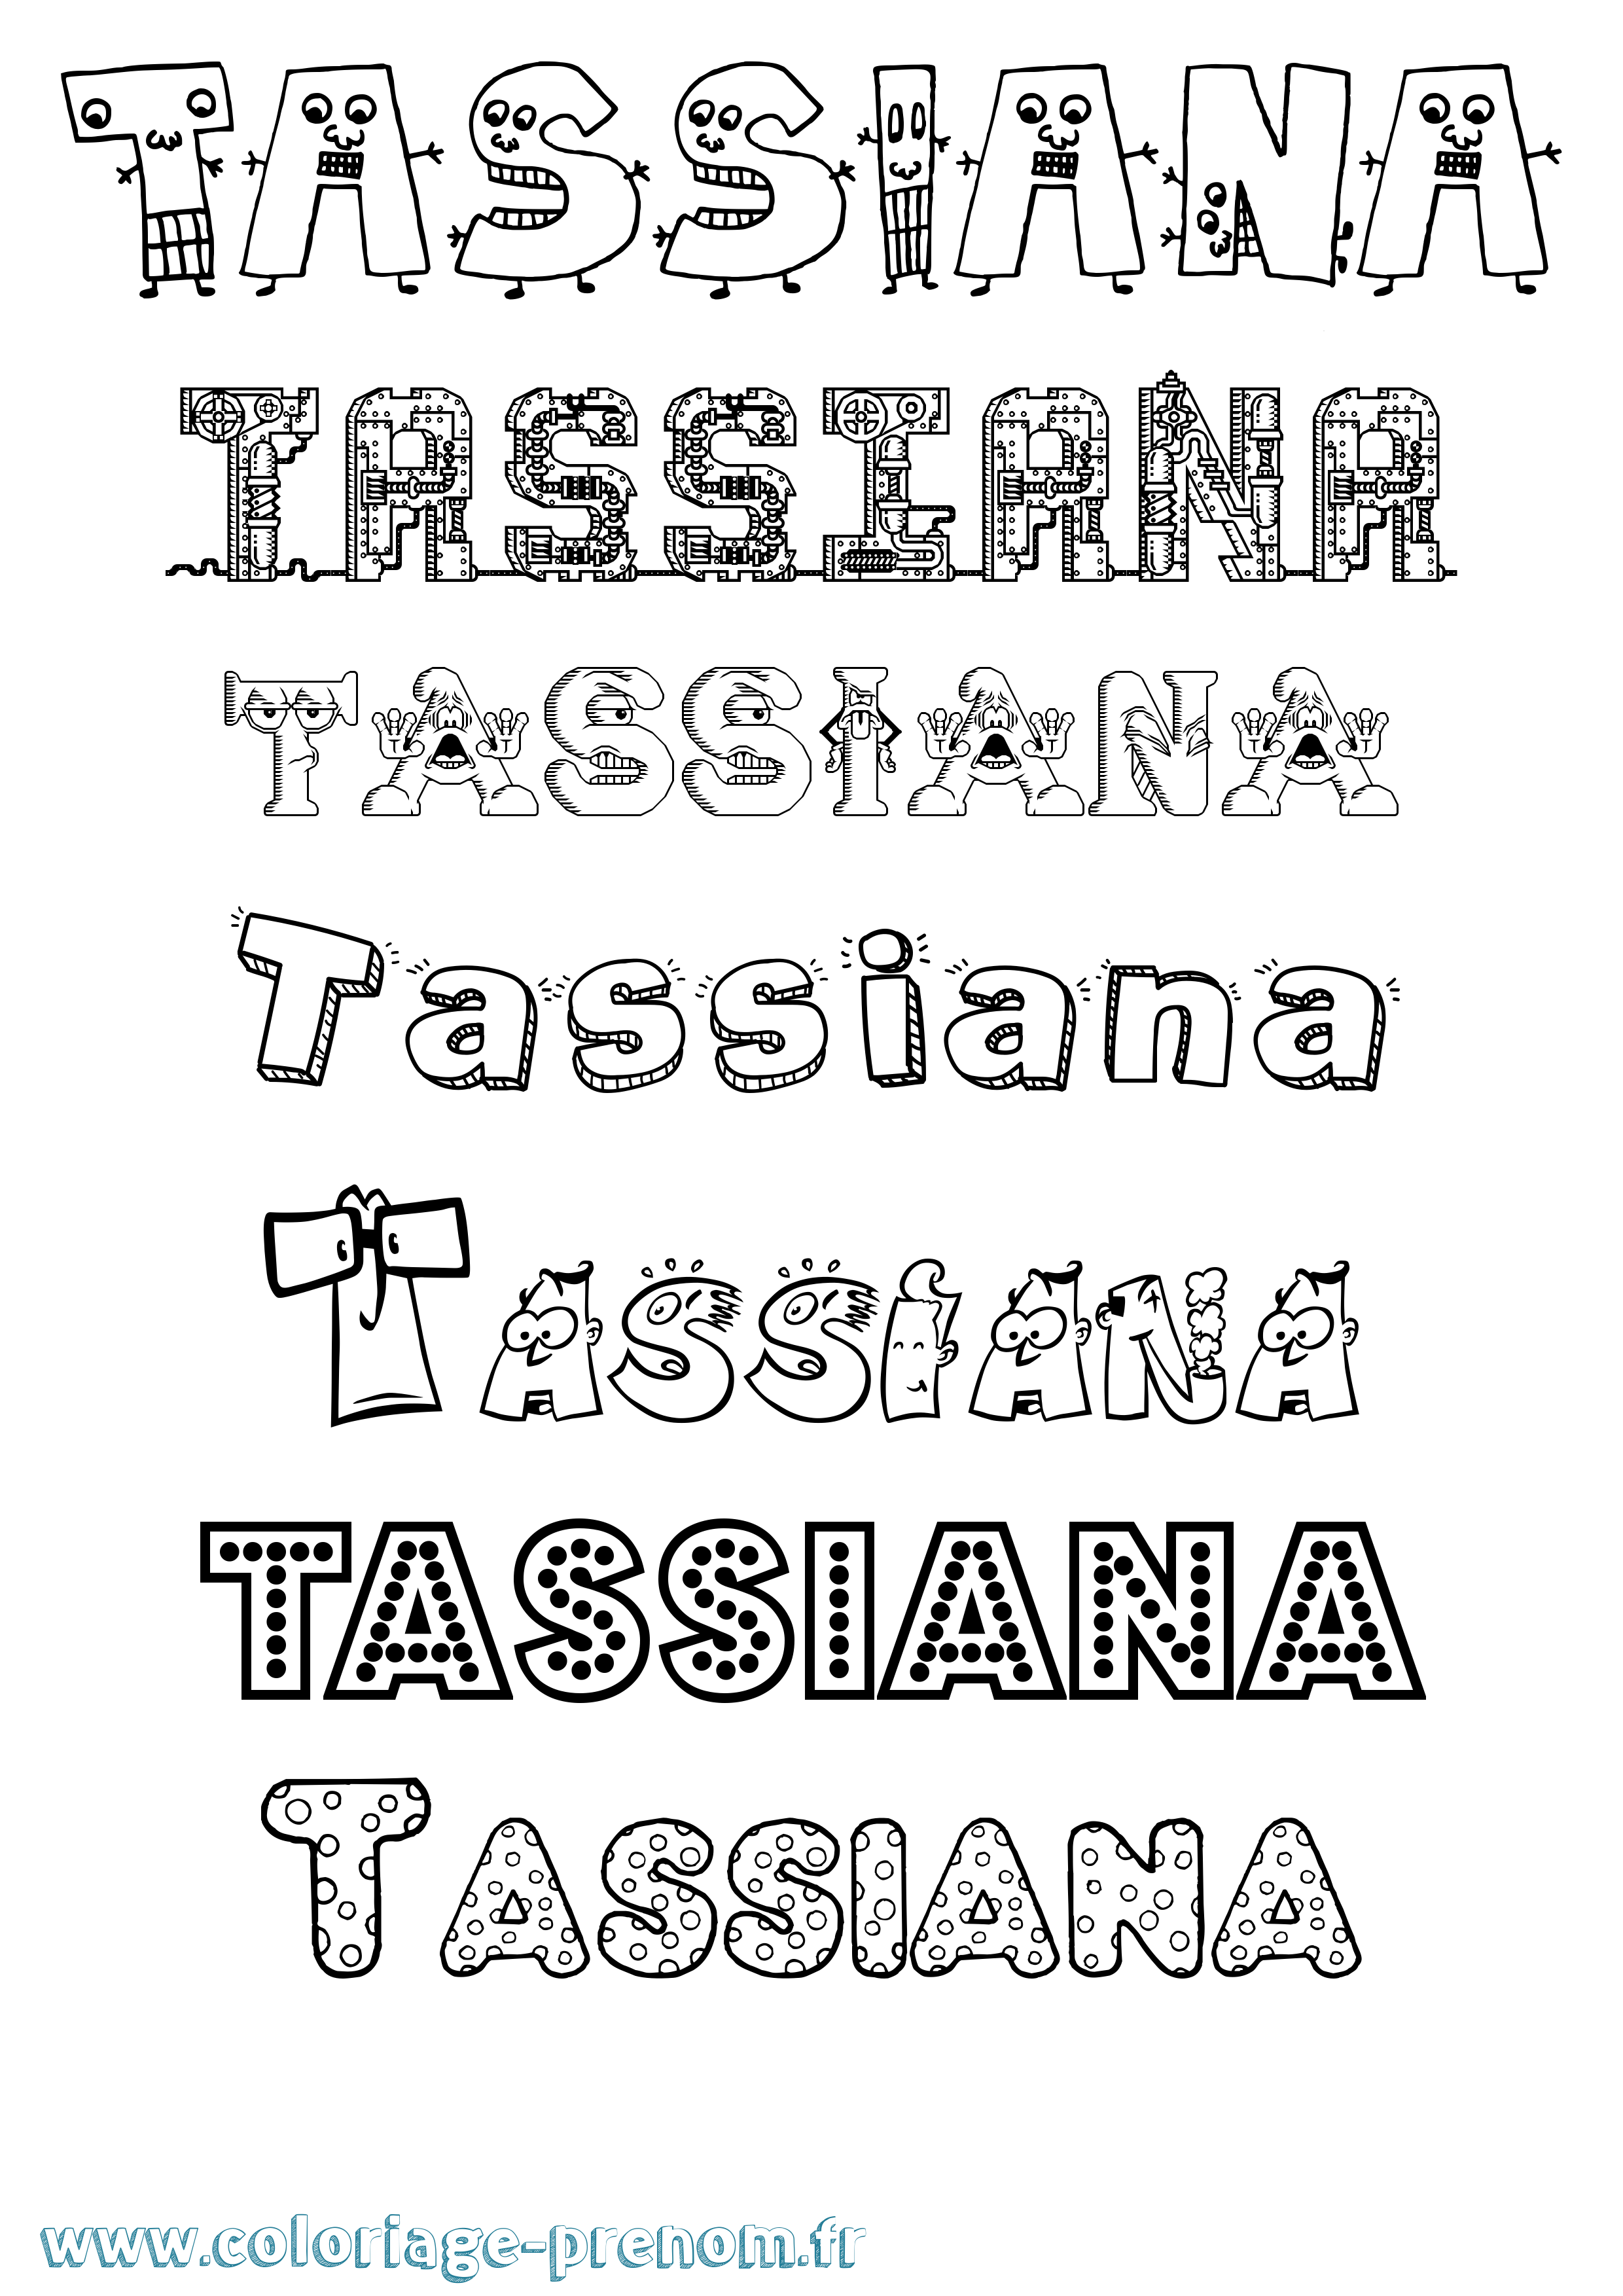 Coloriage prénom Tassiana Fun